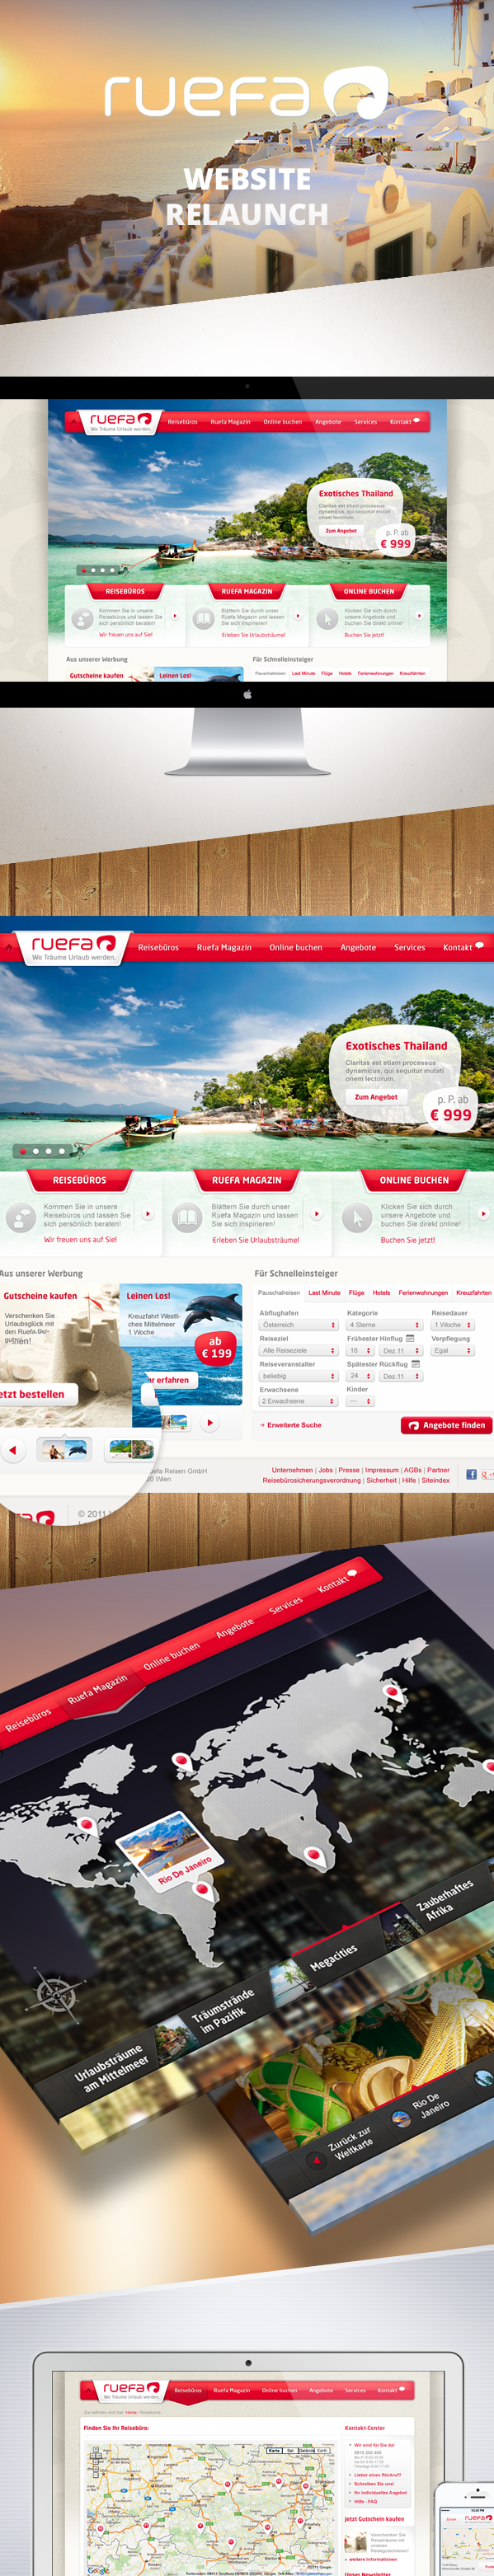 Website relaunch Travel tourism ruefa 4dsolutions vienna wien